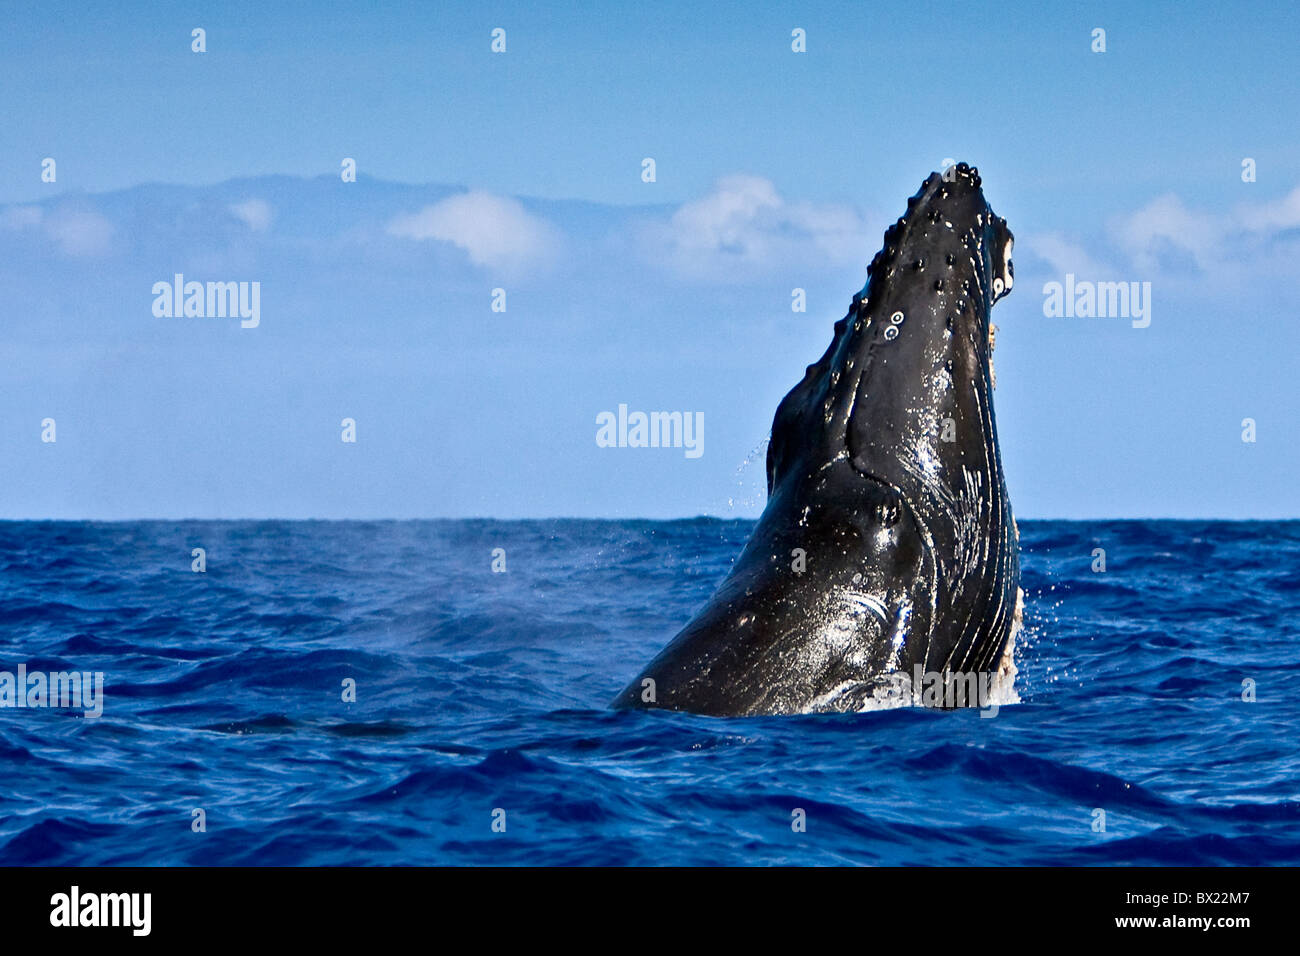 humpback whale, Megaptera novaeangliae, breaching, Haleakala of Maui in background, Hawaii, USA, Pacific Ocean Stock Photo